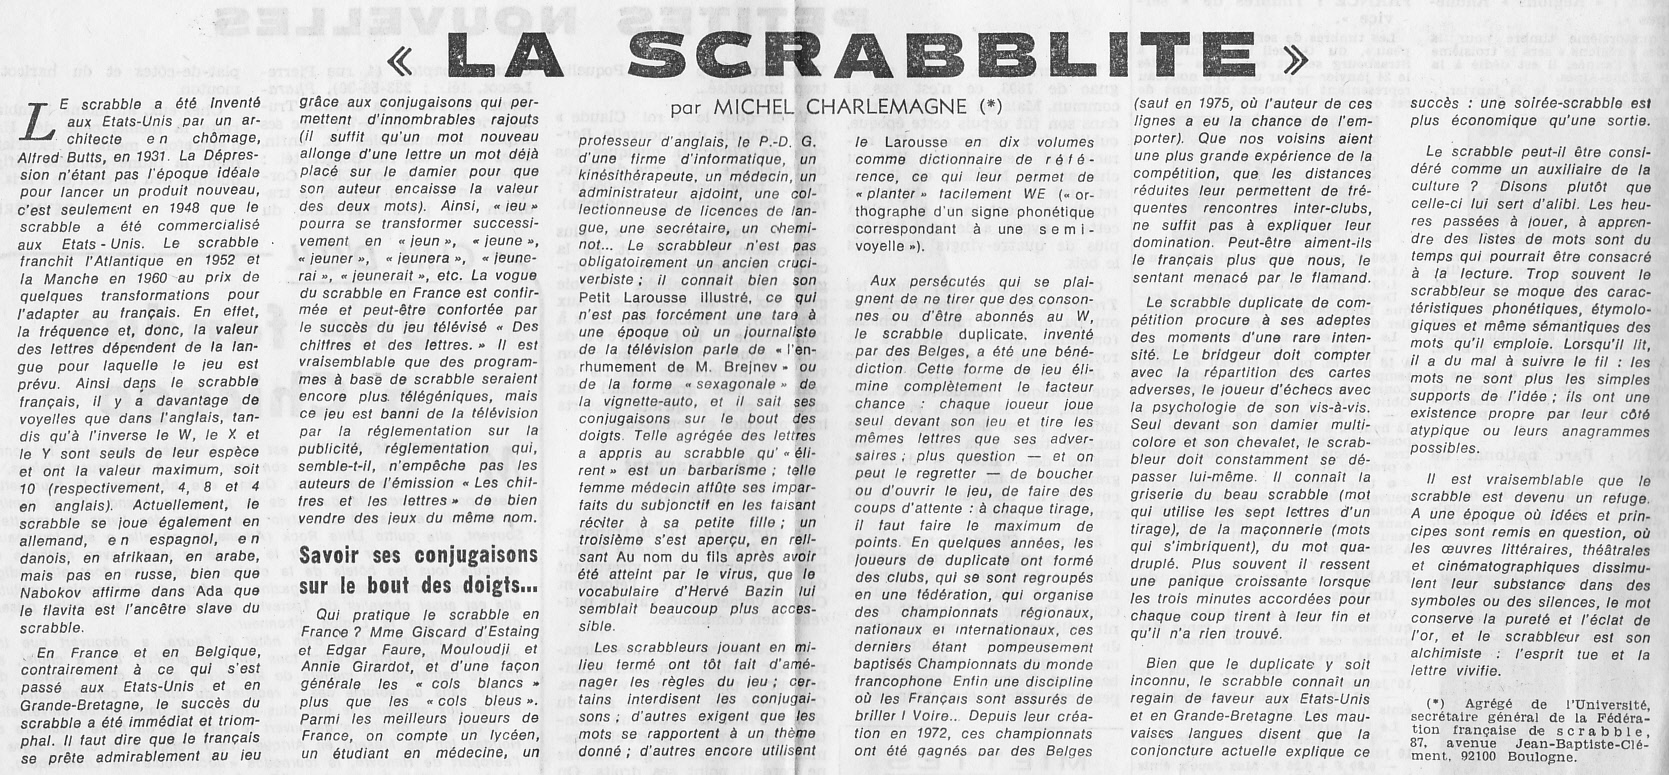 1977 01 15 - La scrabblite.jpg